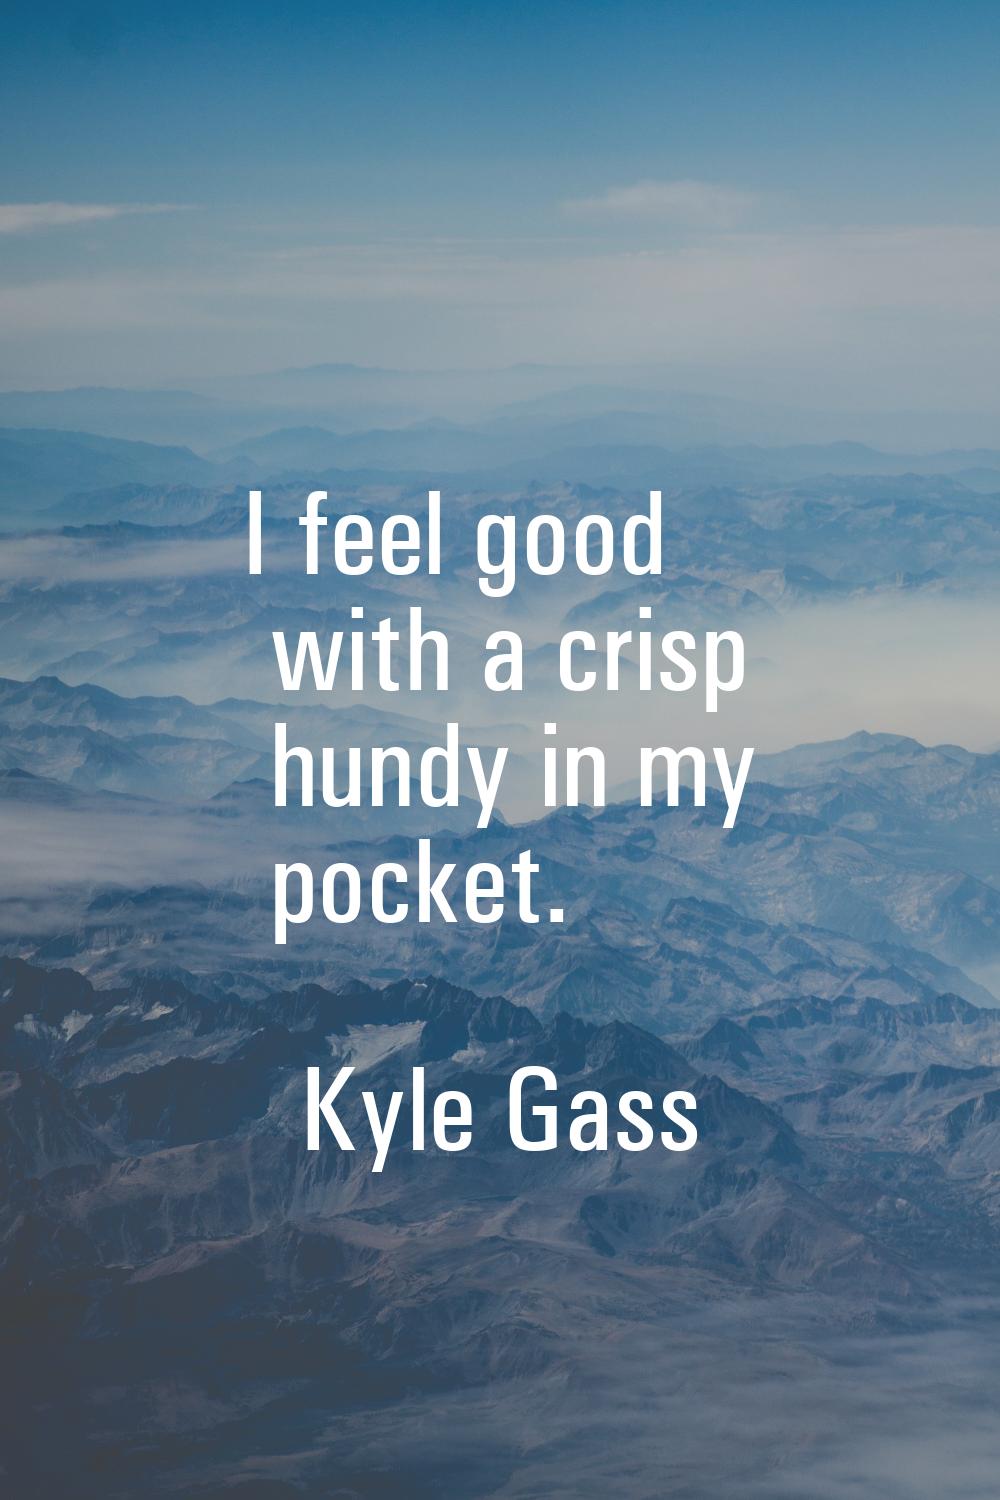 I feel good with a crisp hundy in my pocket.